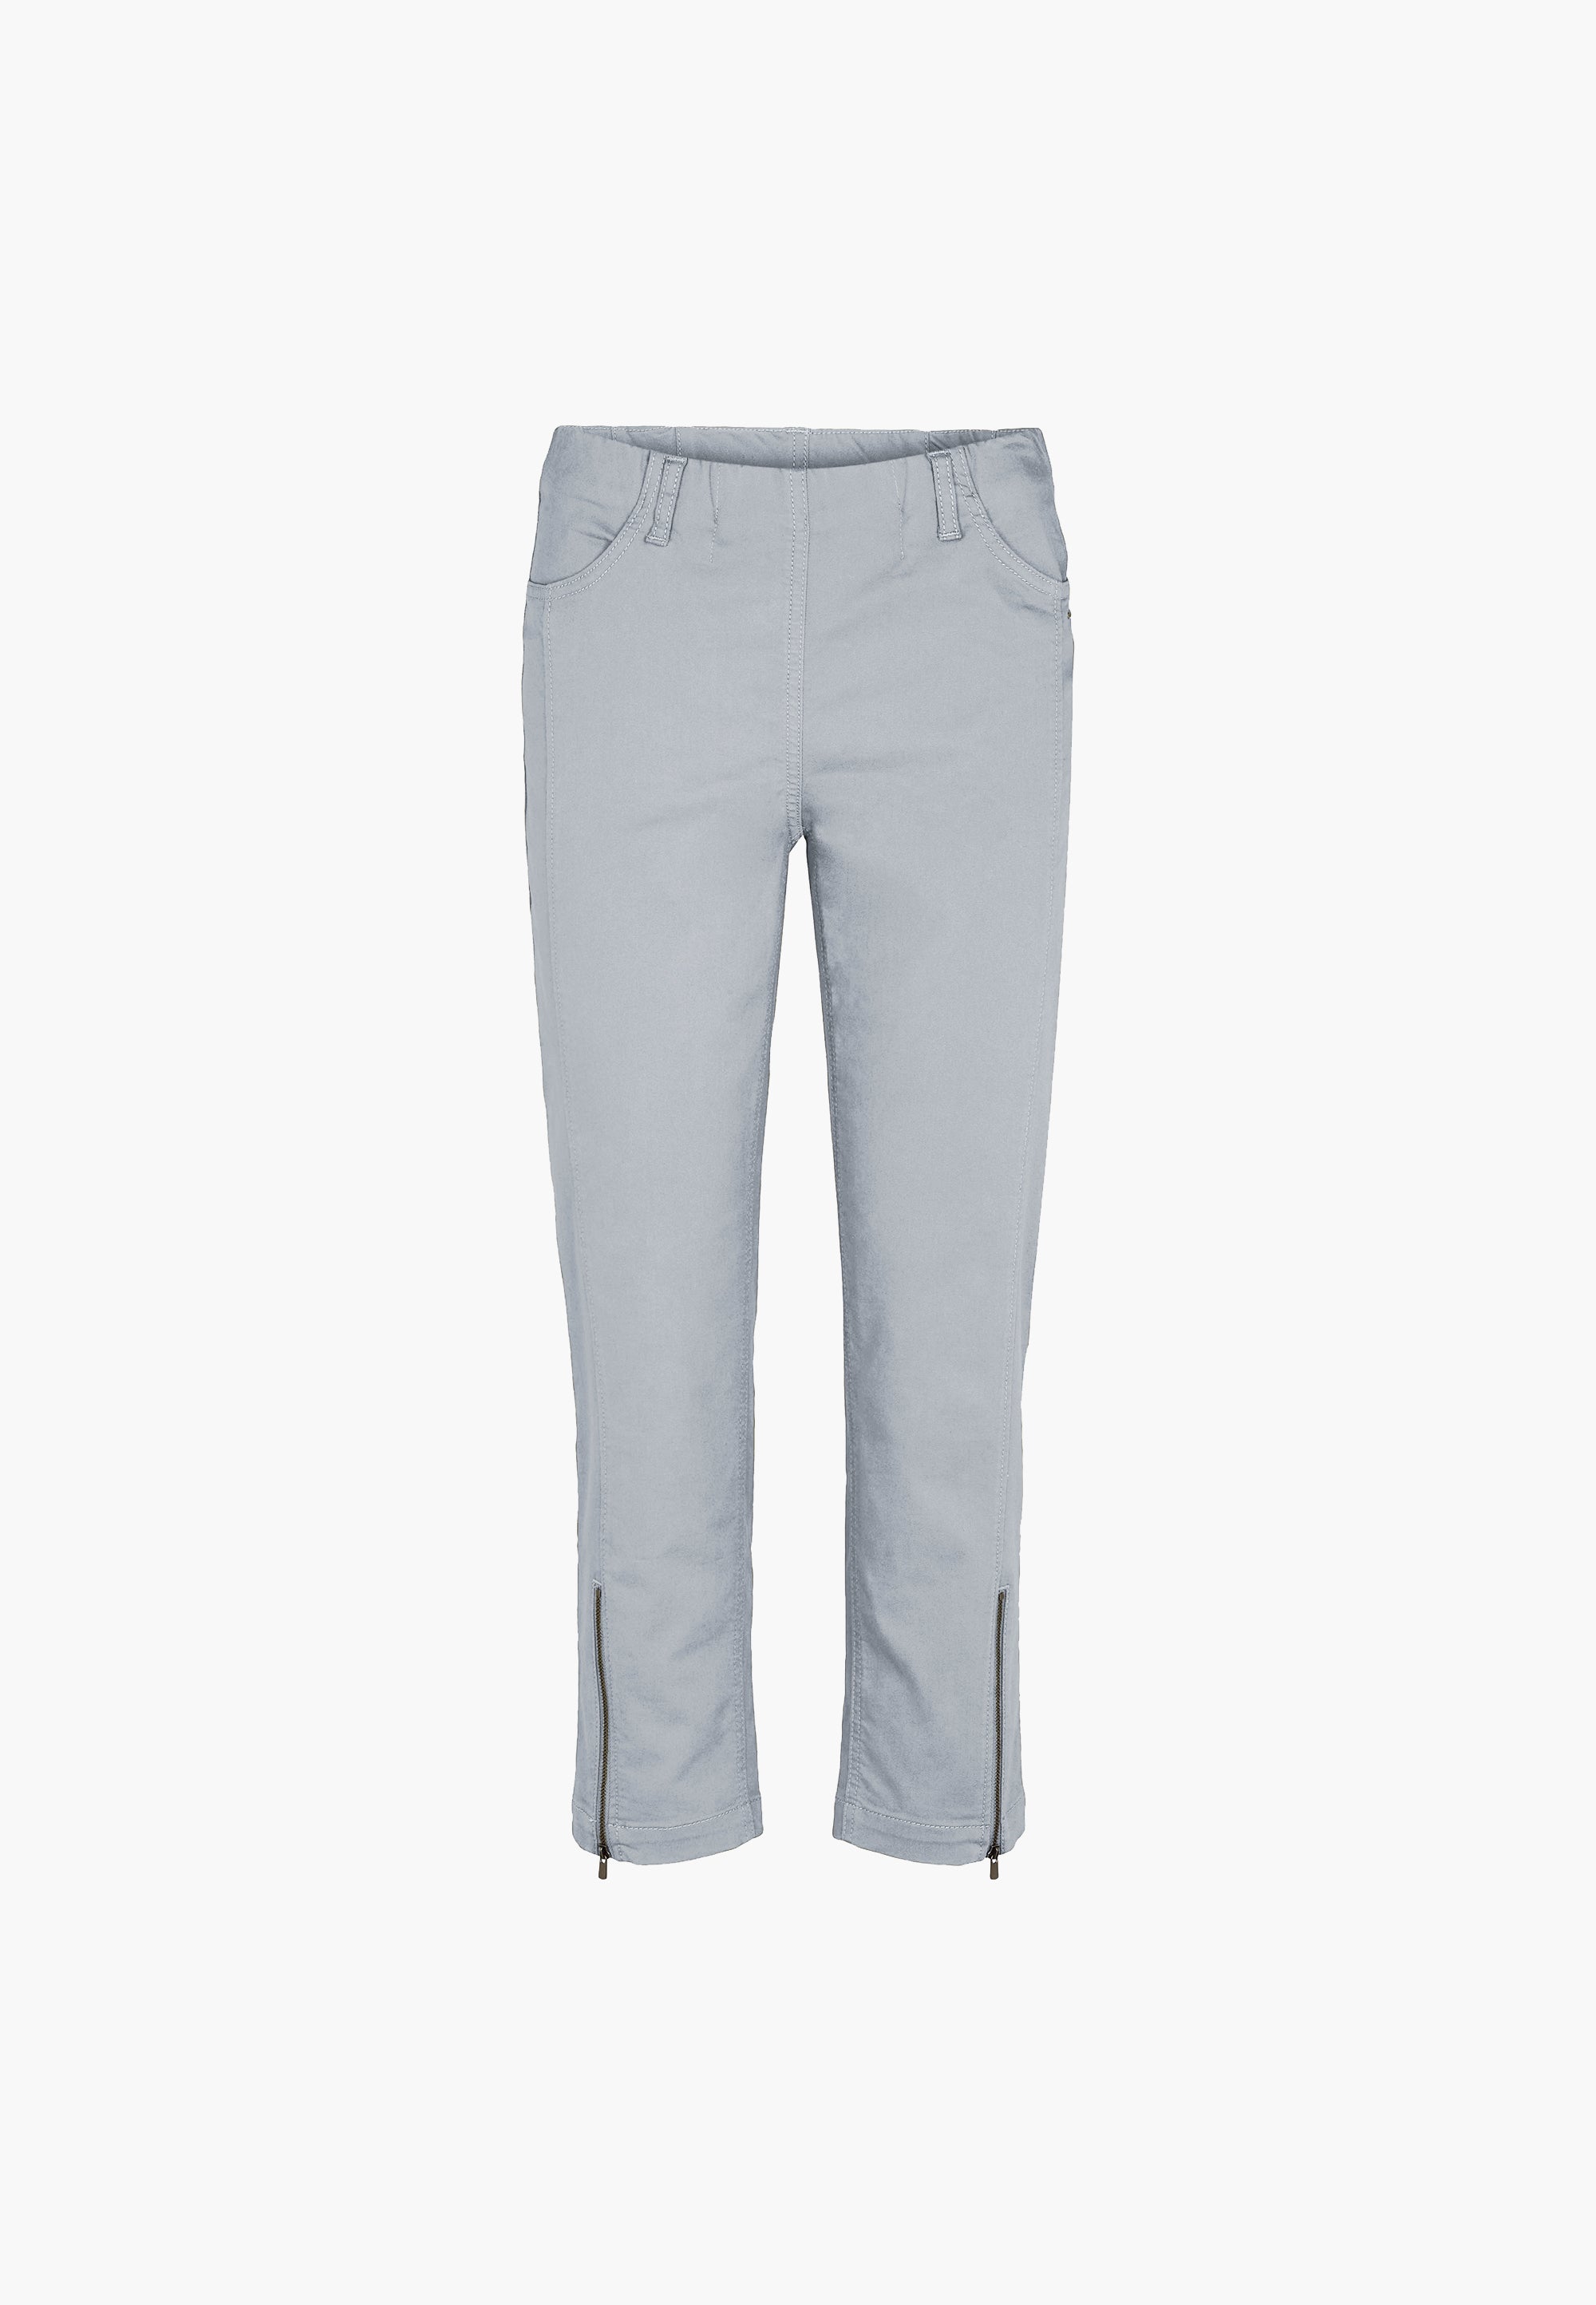 LAURIE Piper Regular Crop Trousers REGULAR 91000 Light Grey